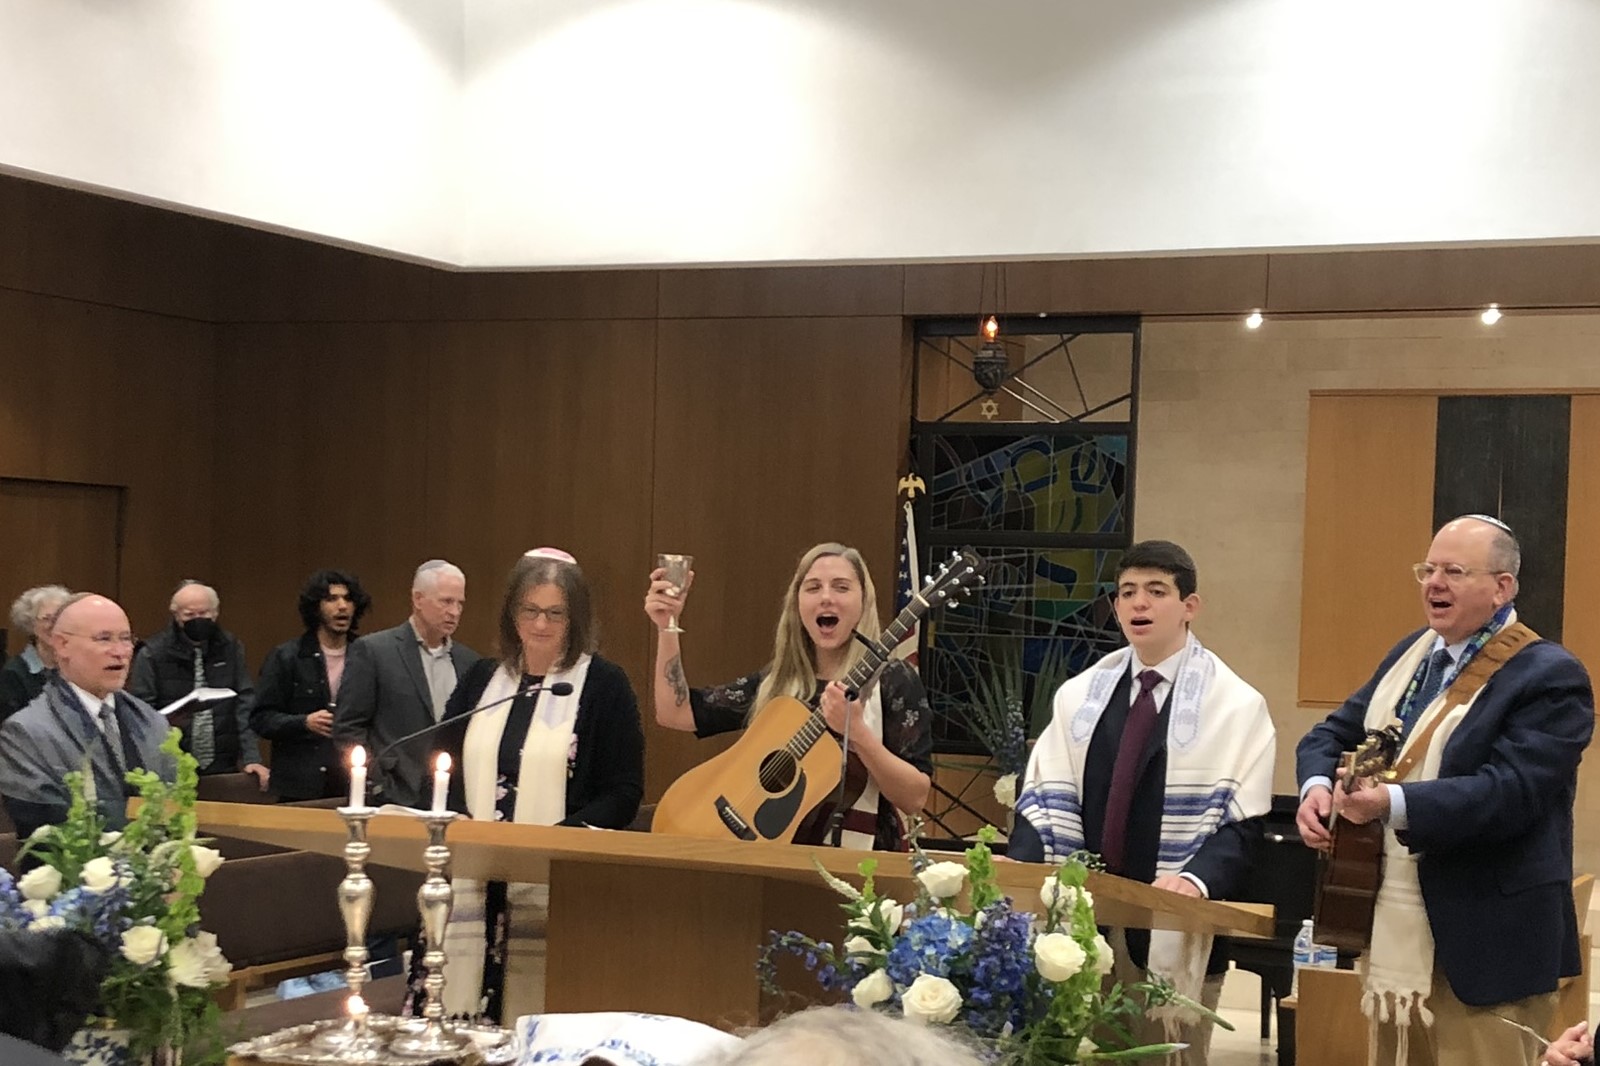 Singing at Rabbi's installation